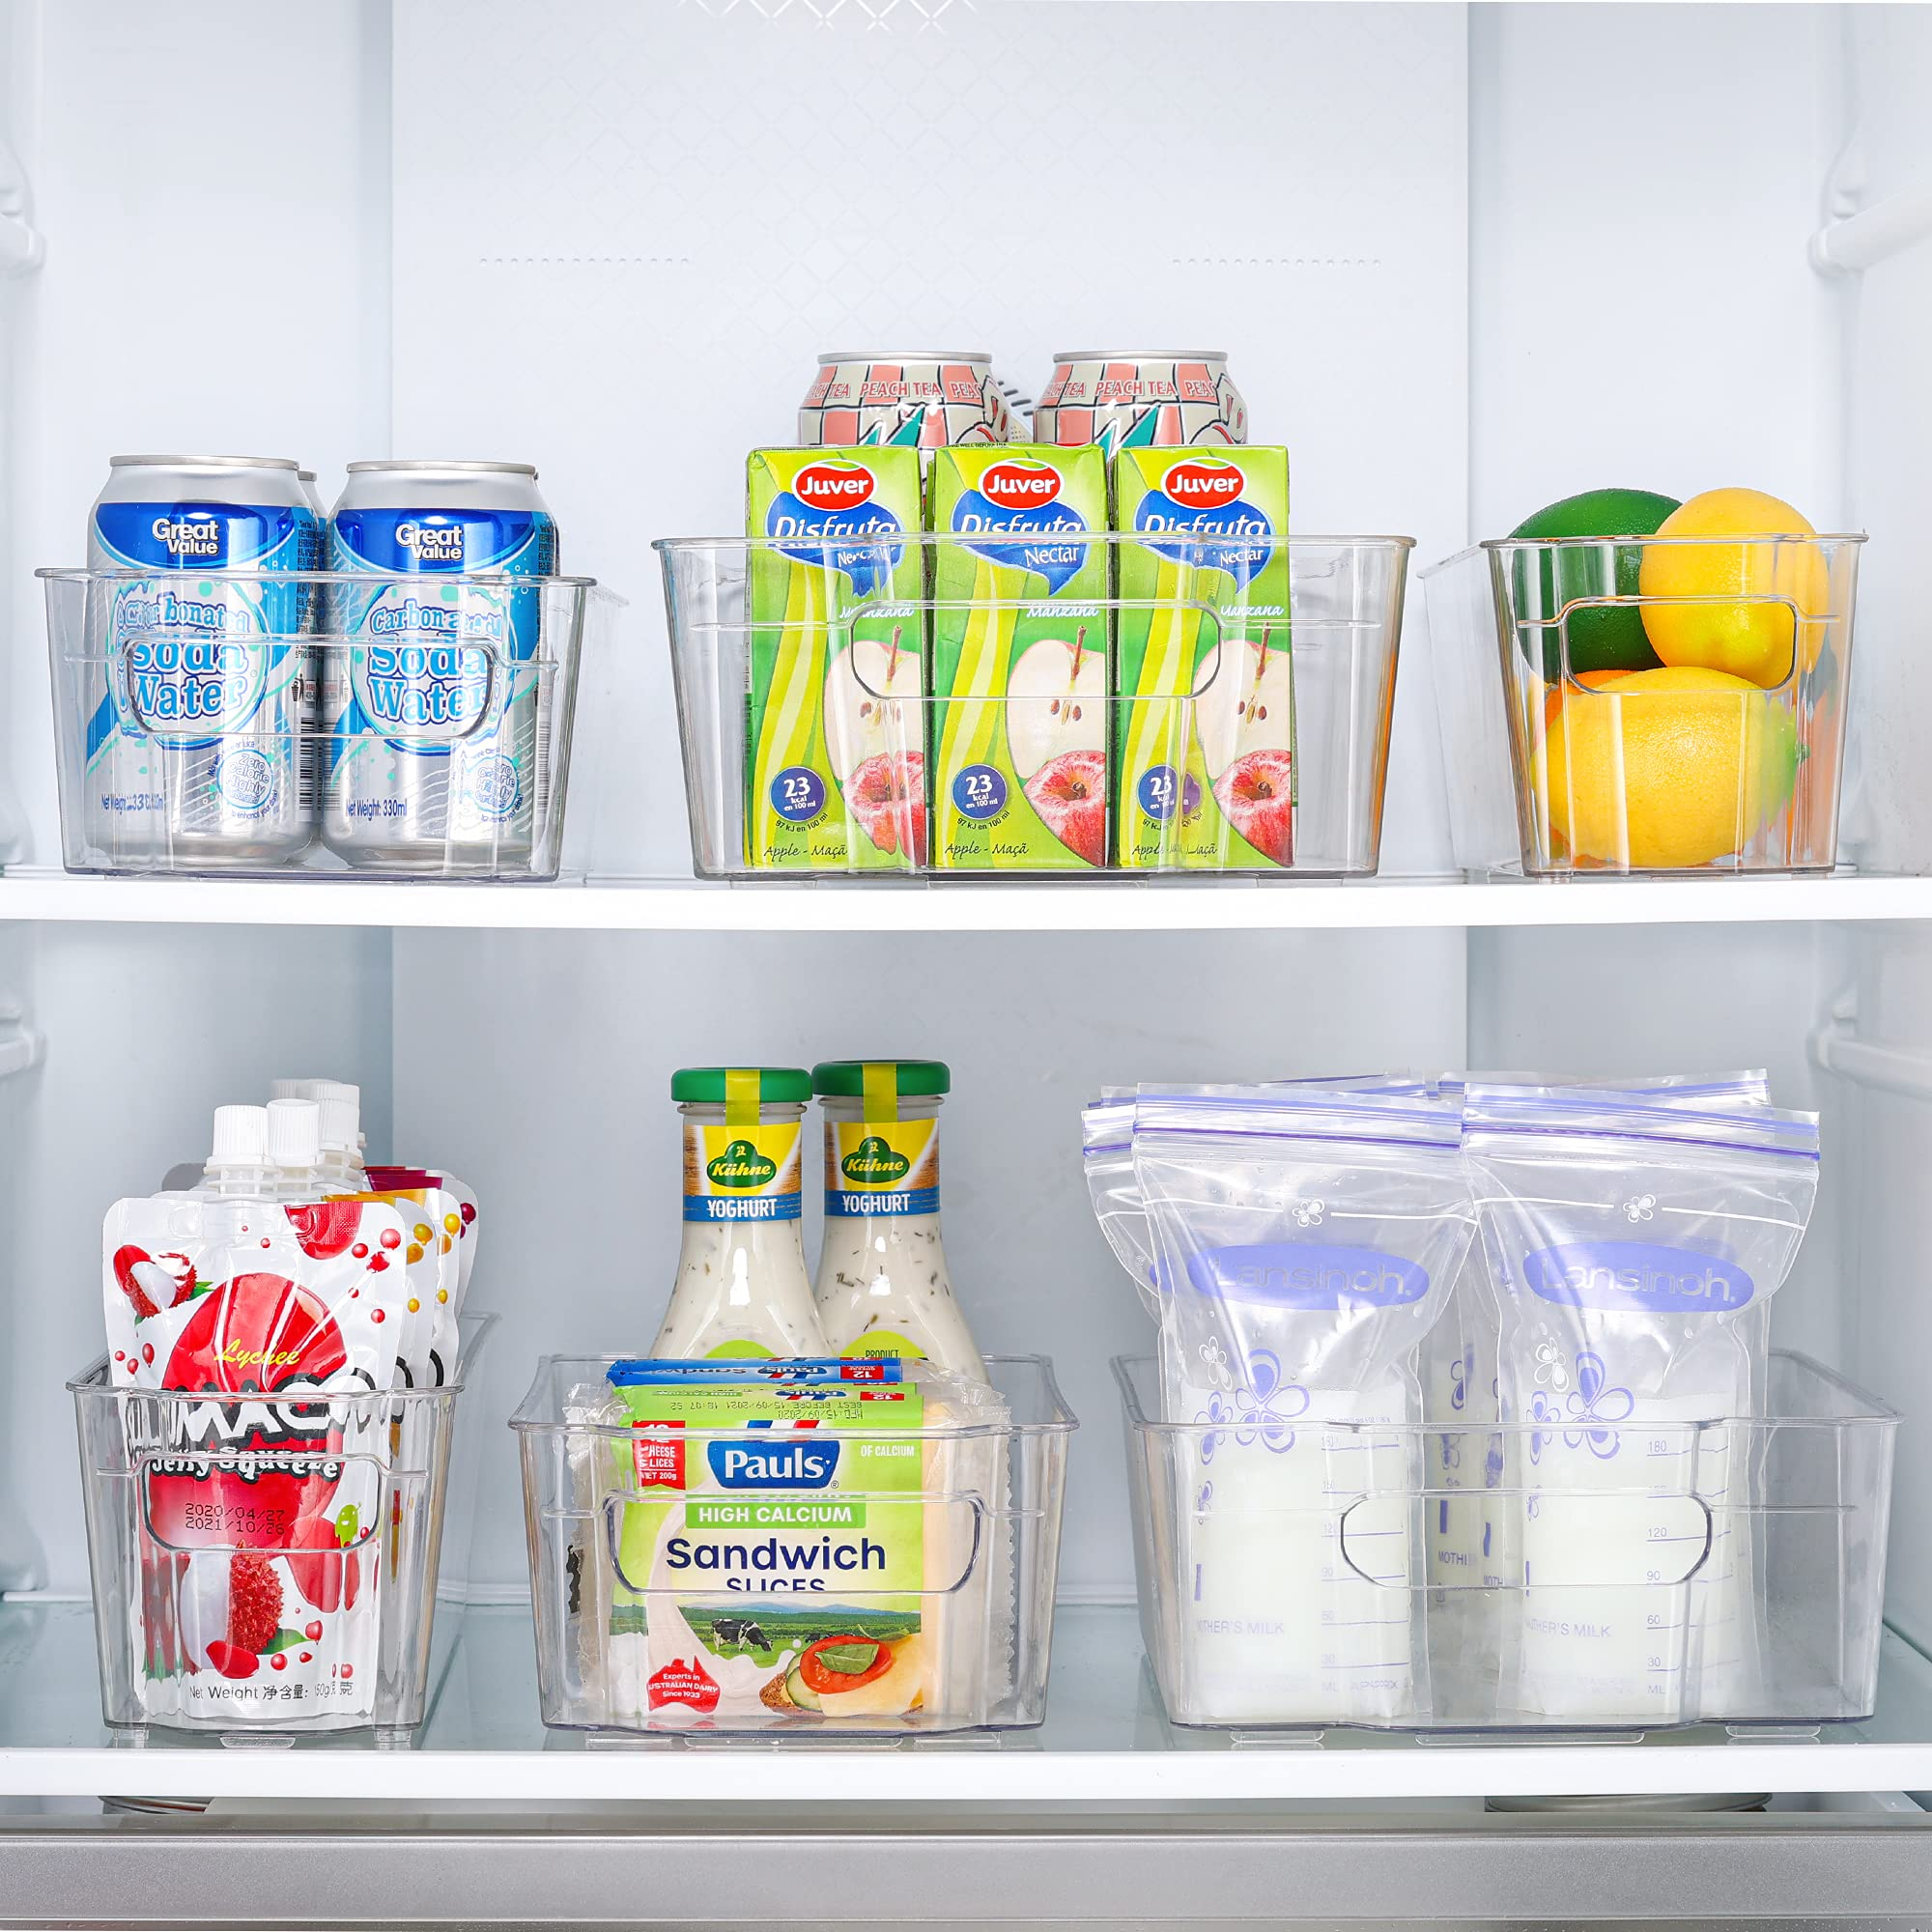  HOOJO Refrigerator Organizer Bins - 14pcs Clear Plastic Bins  For Fridge, Freezer, Kitchen Cabinet, Pantry Organization and Storage, BPA  Free Fridge Organizer, 12.5 Long-Medium: Home & Kitchen